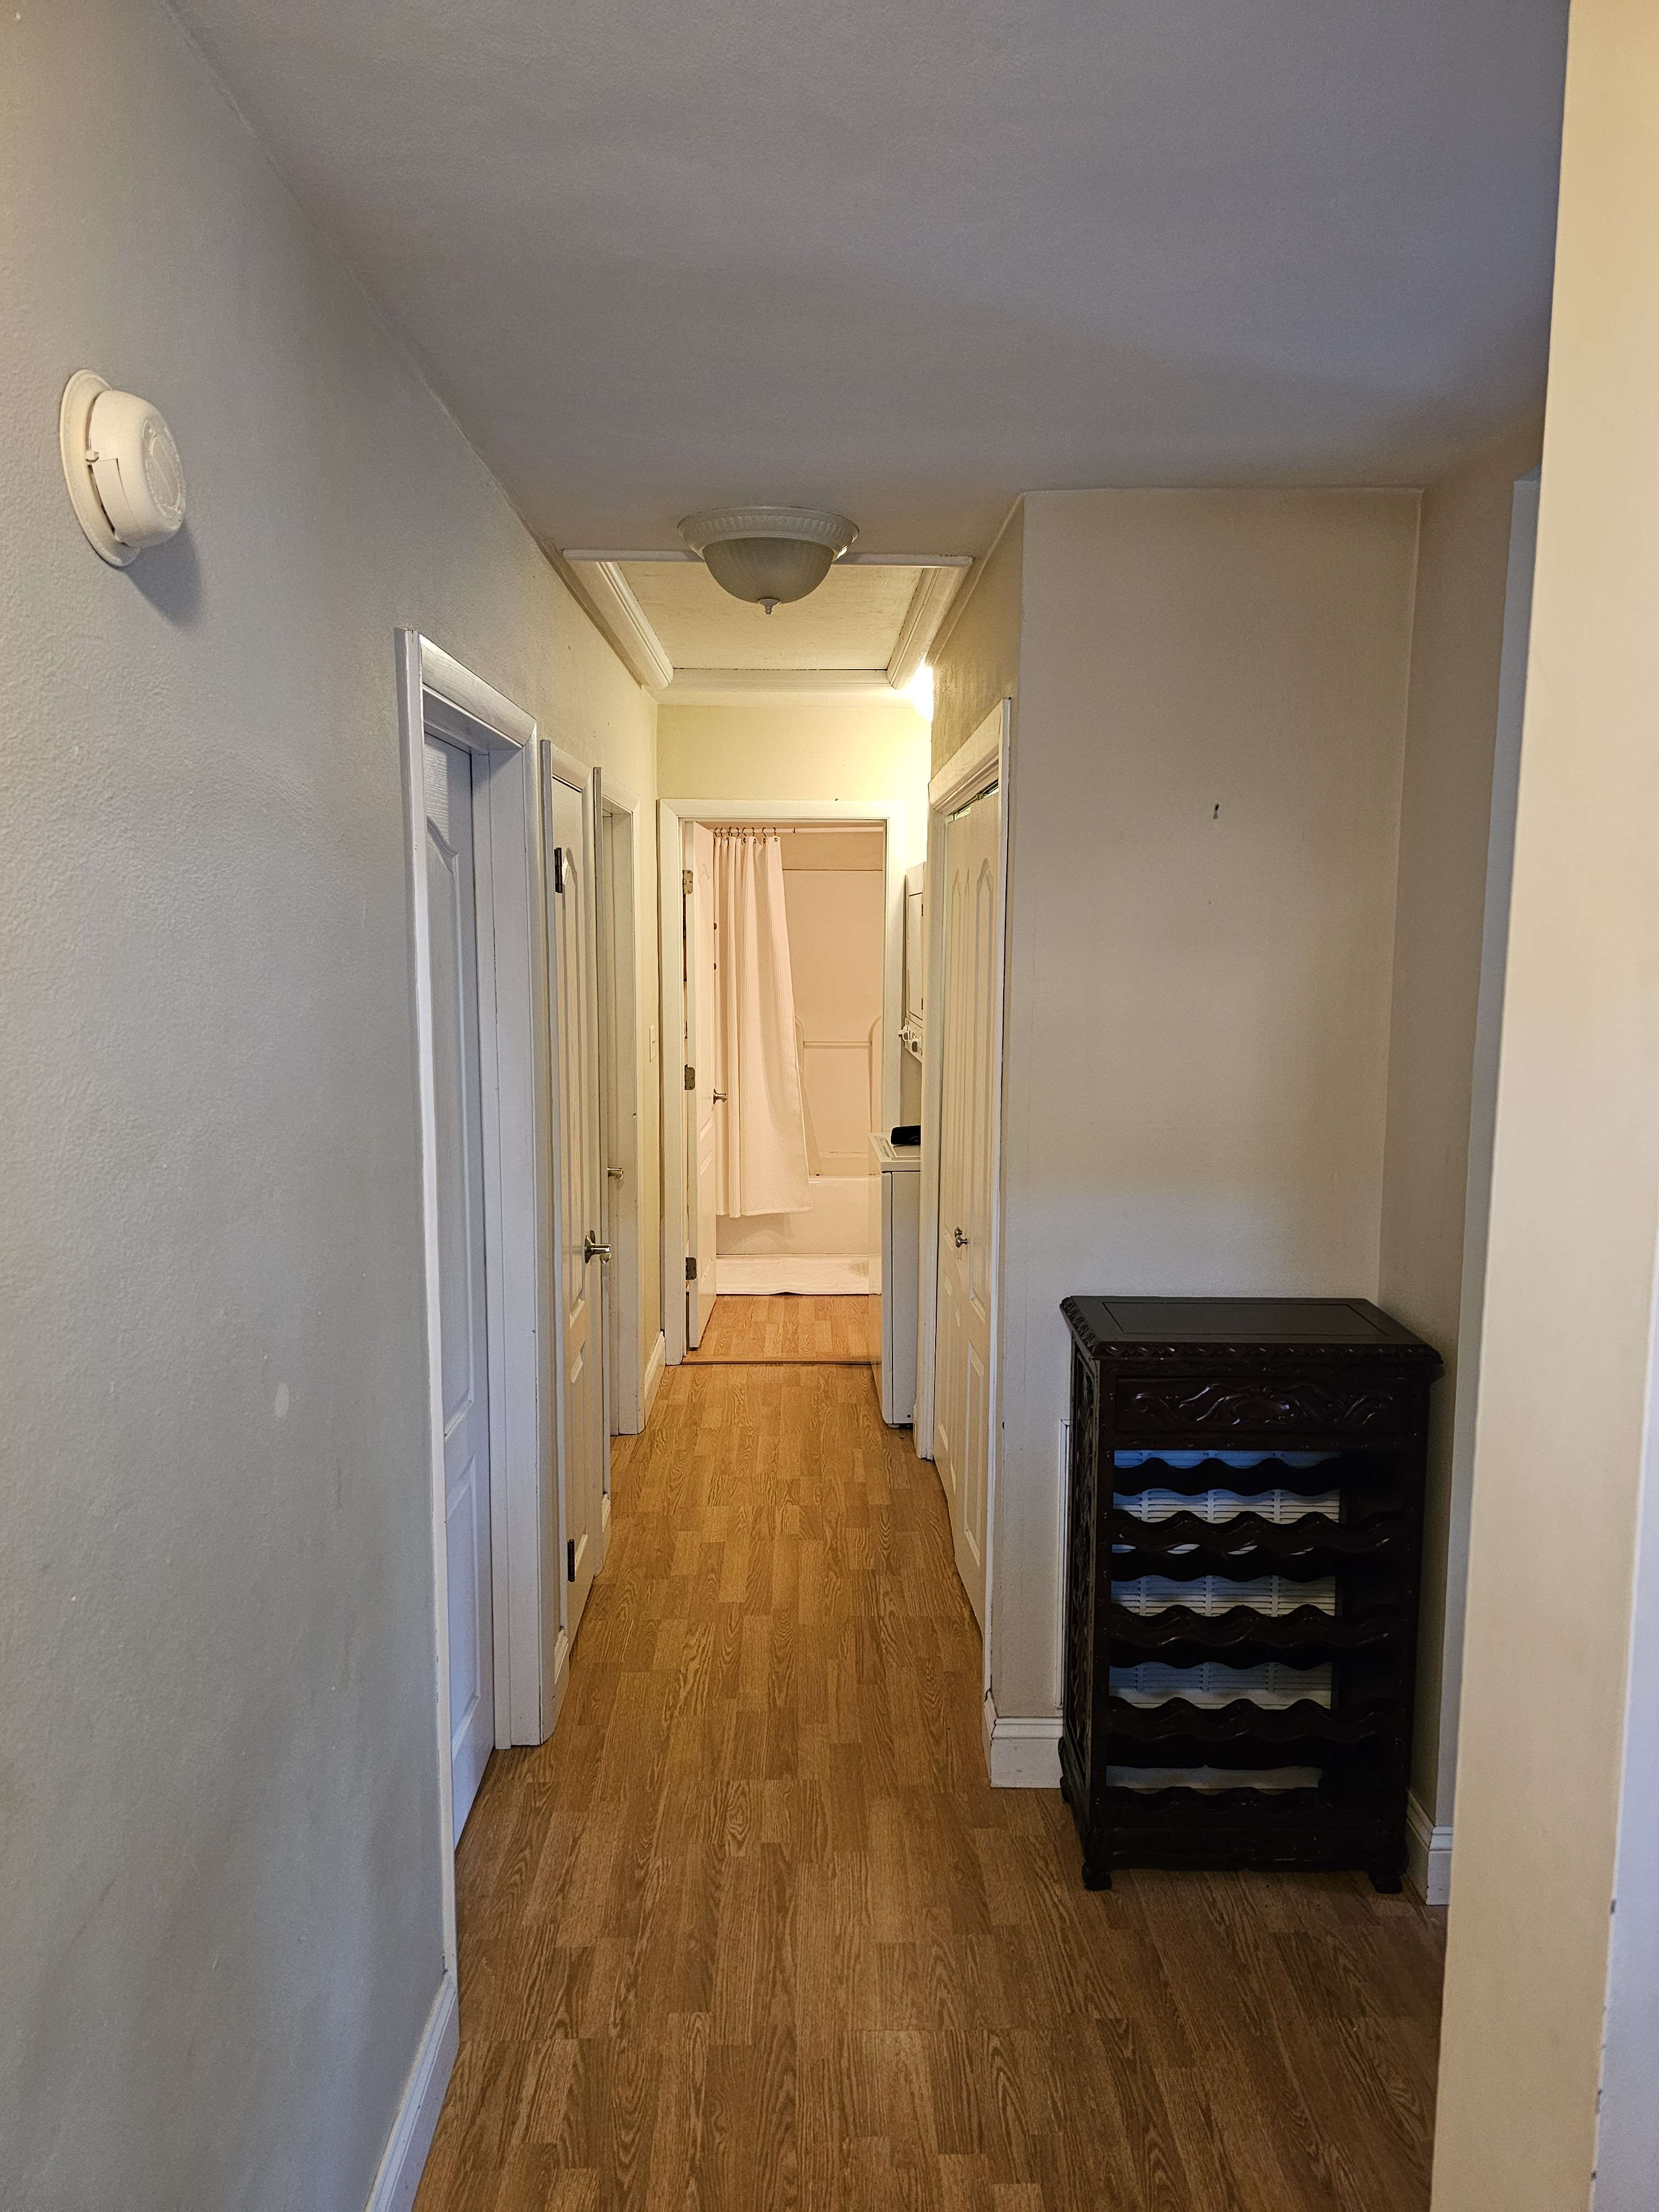 Hallway - bedrooms left, bathroom straight, living area right